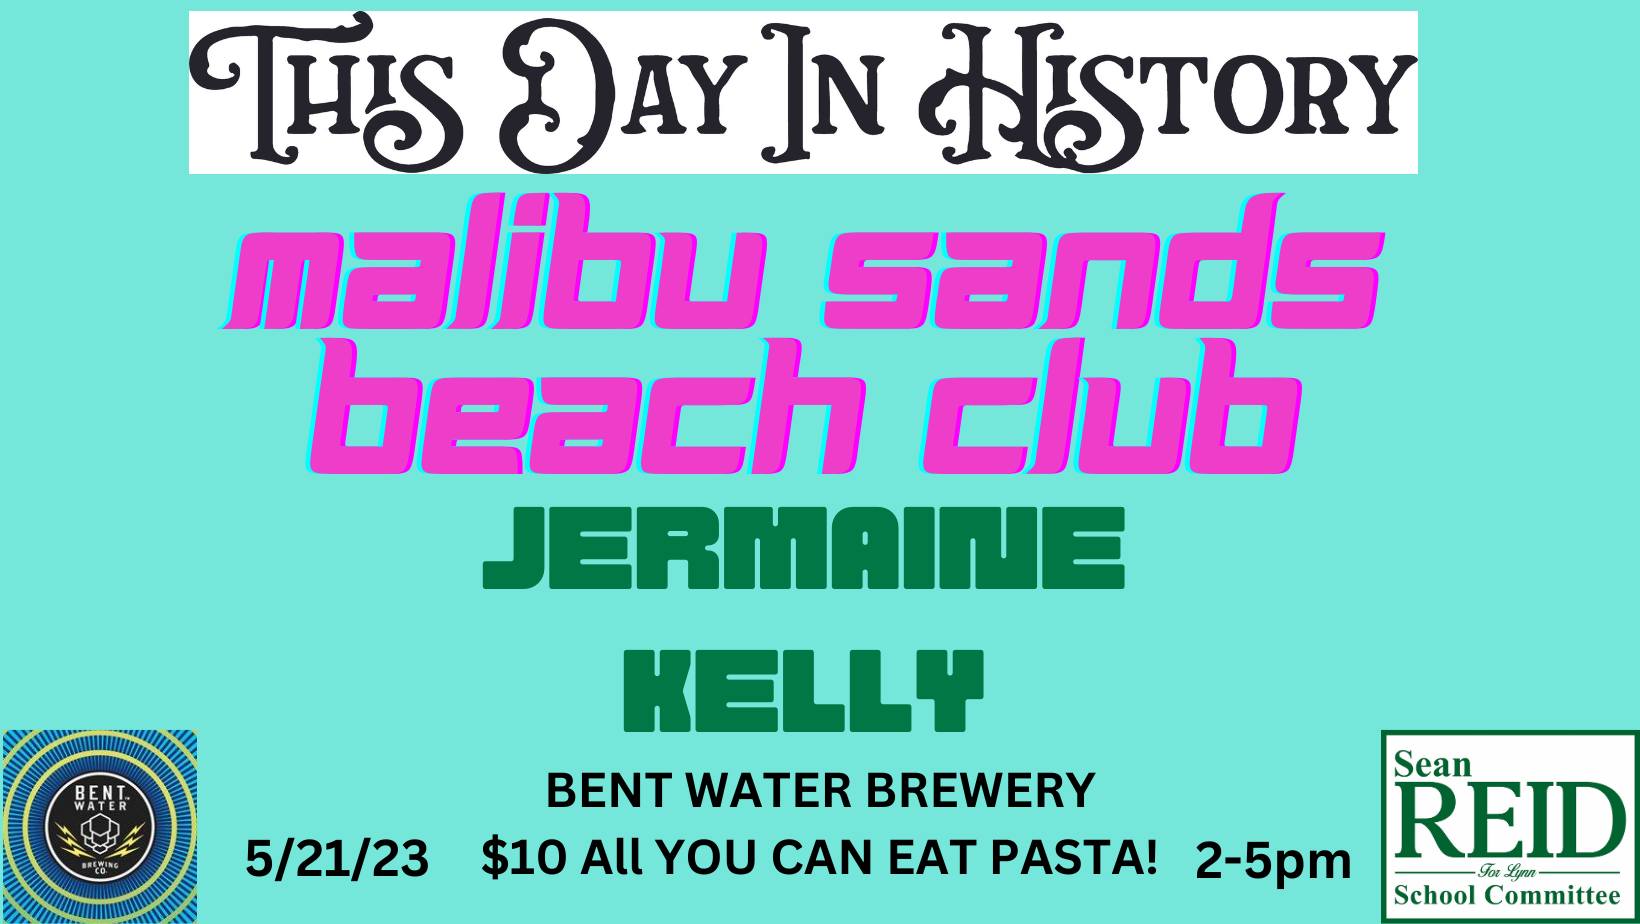 a poster advertising a miami beach club.